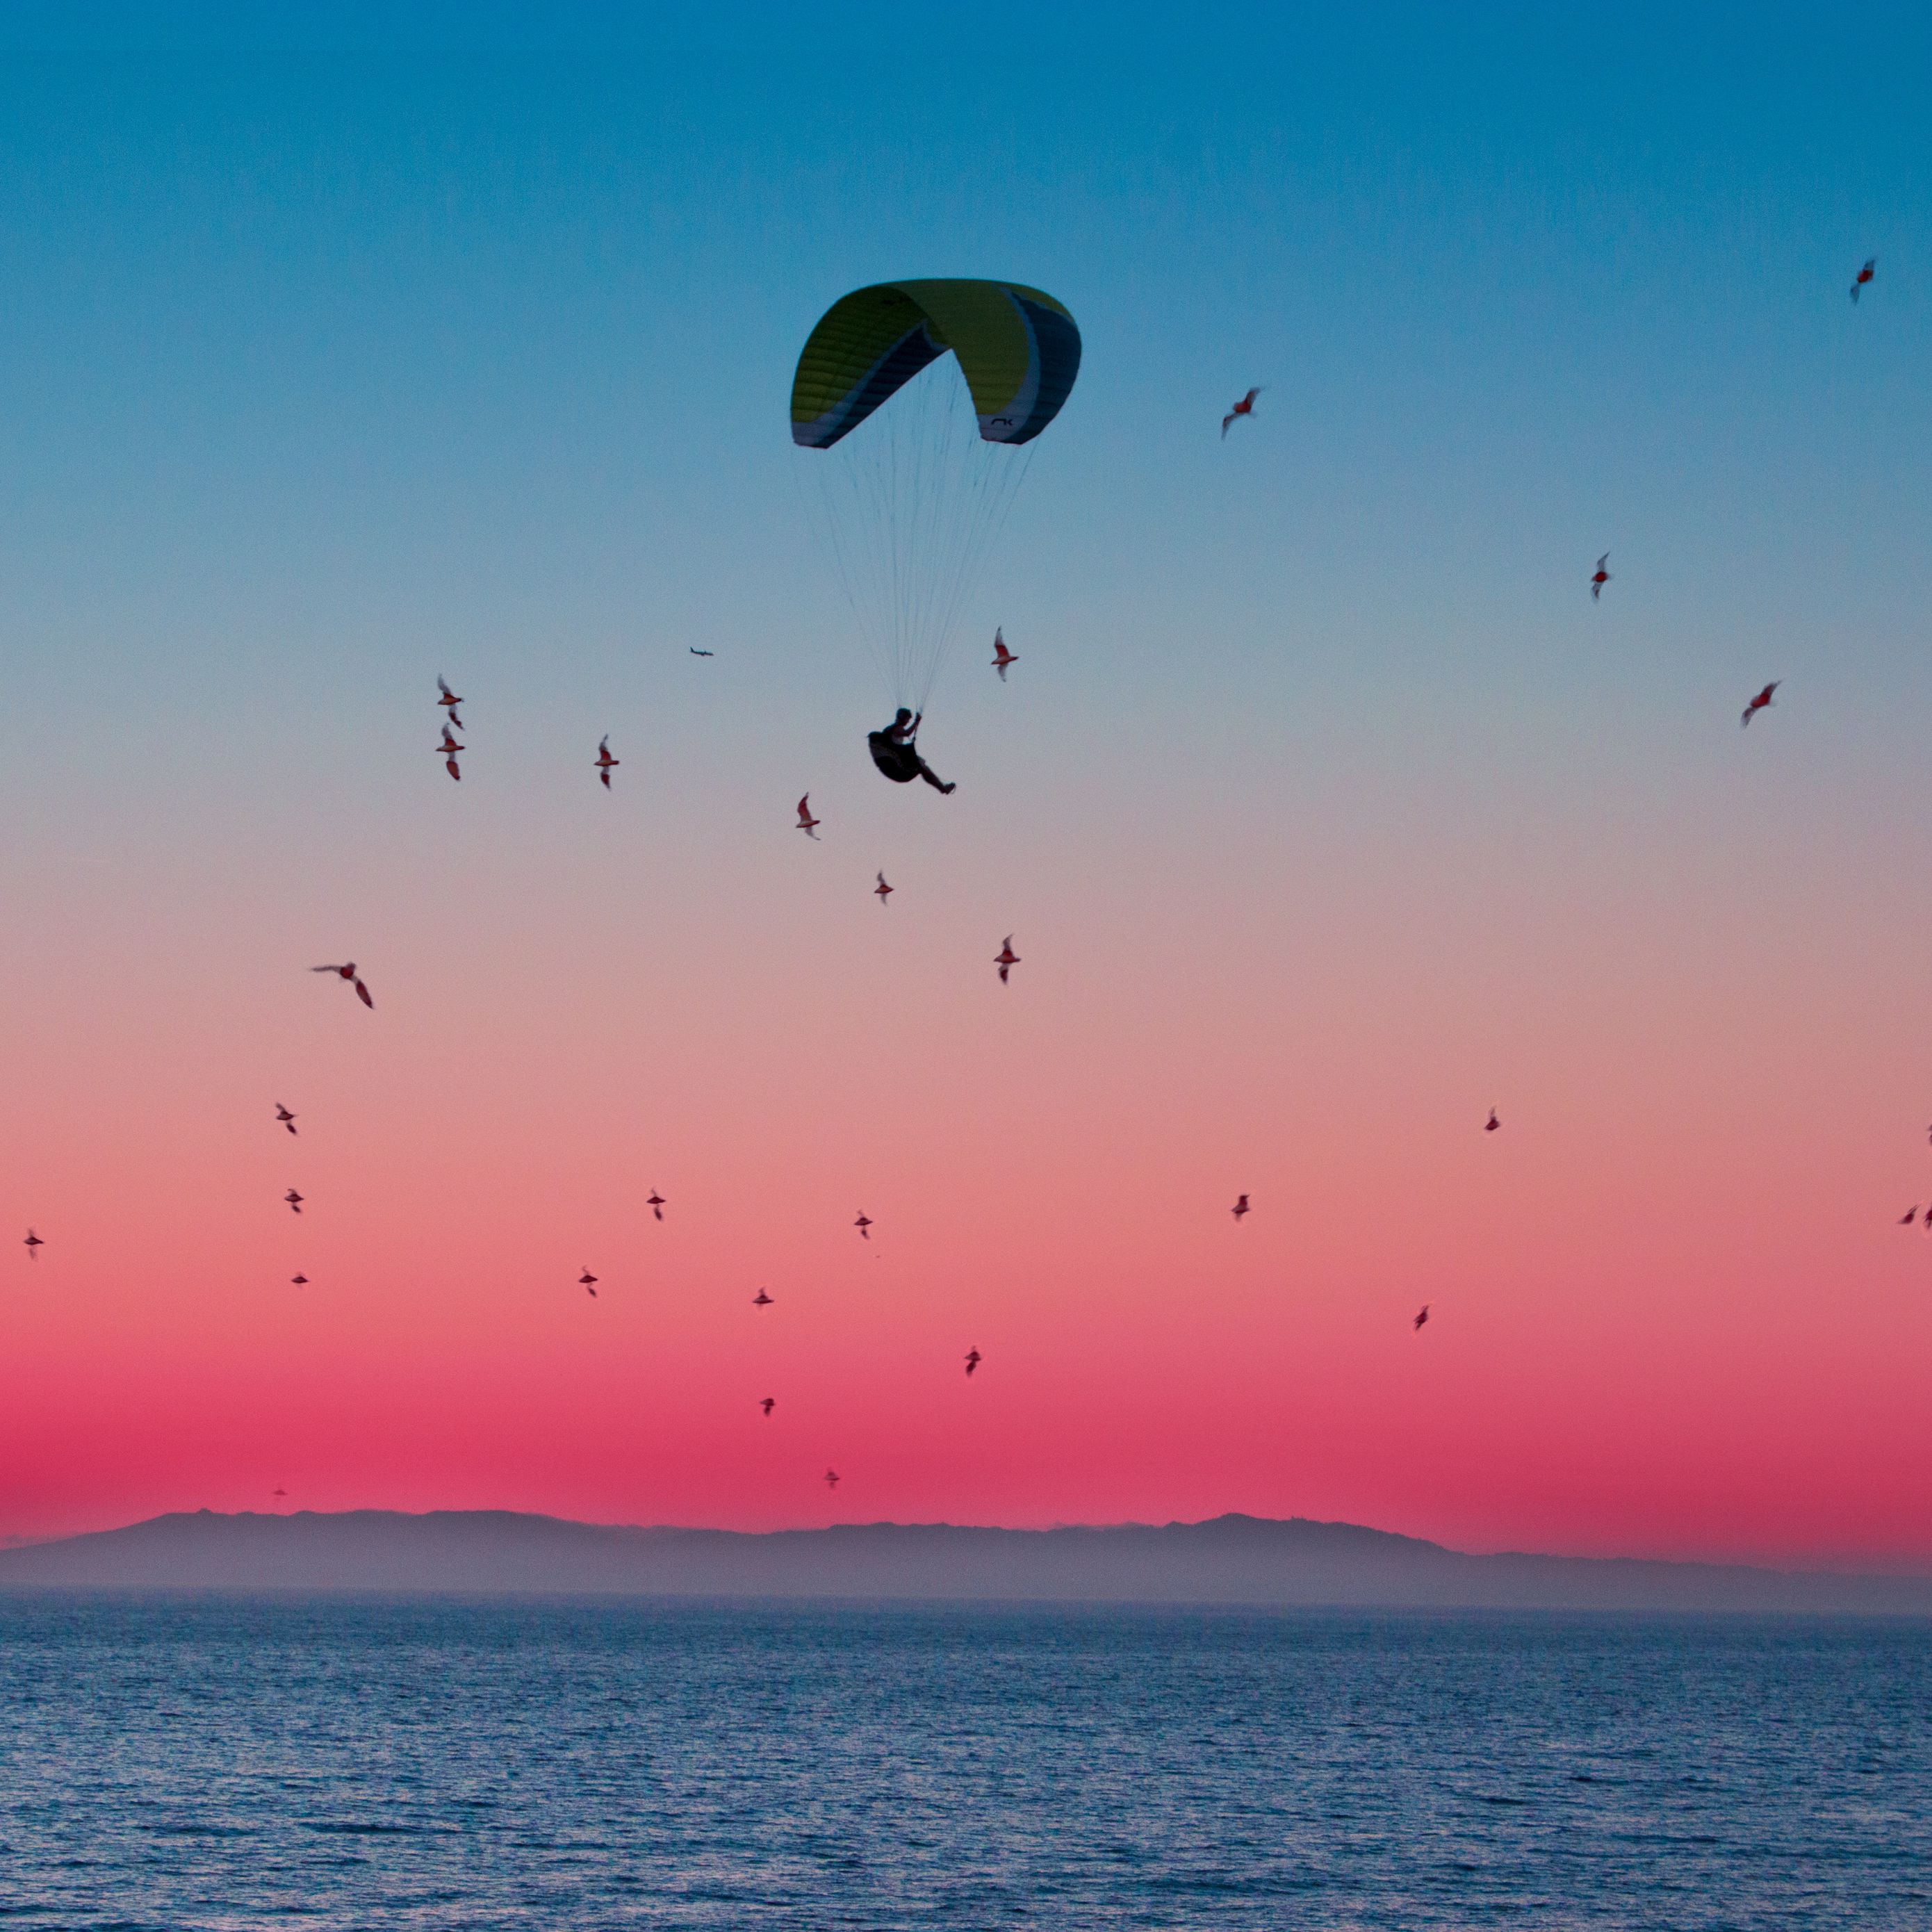 Download wallpaper 2780x2780 paragliding, parachute, sea, flight, birds ...